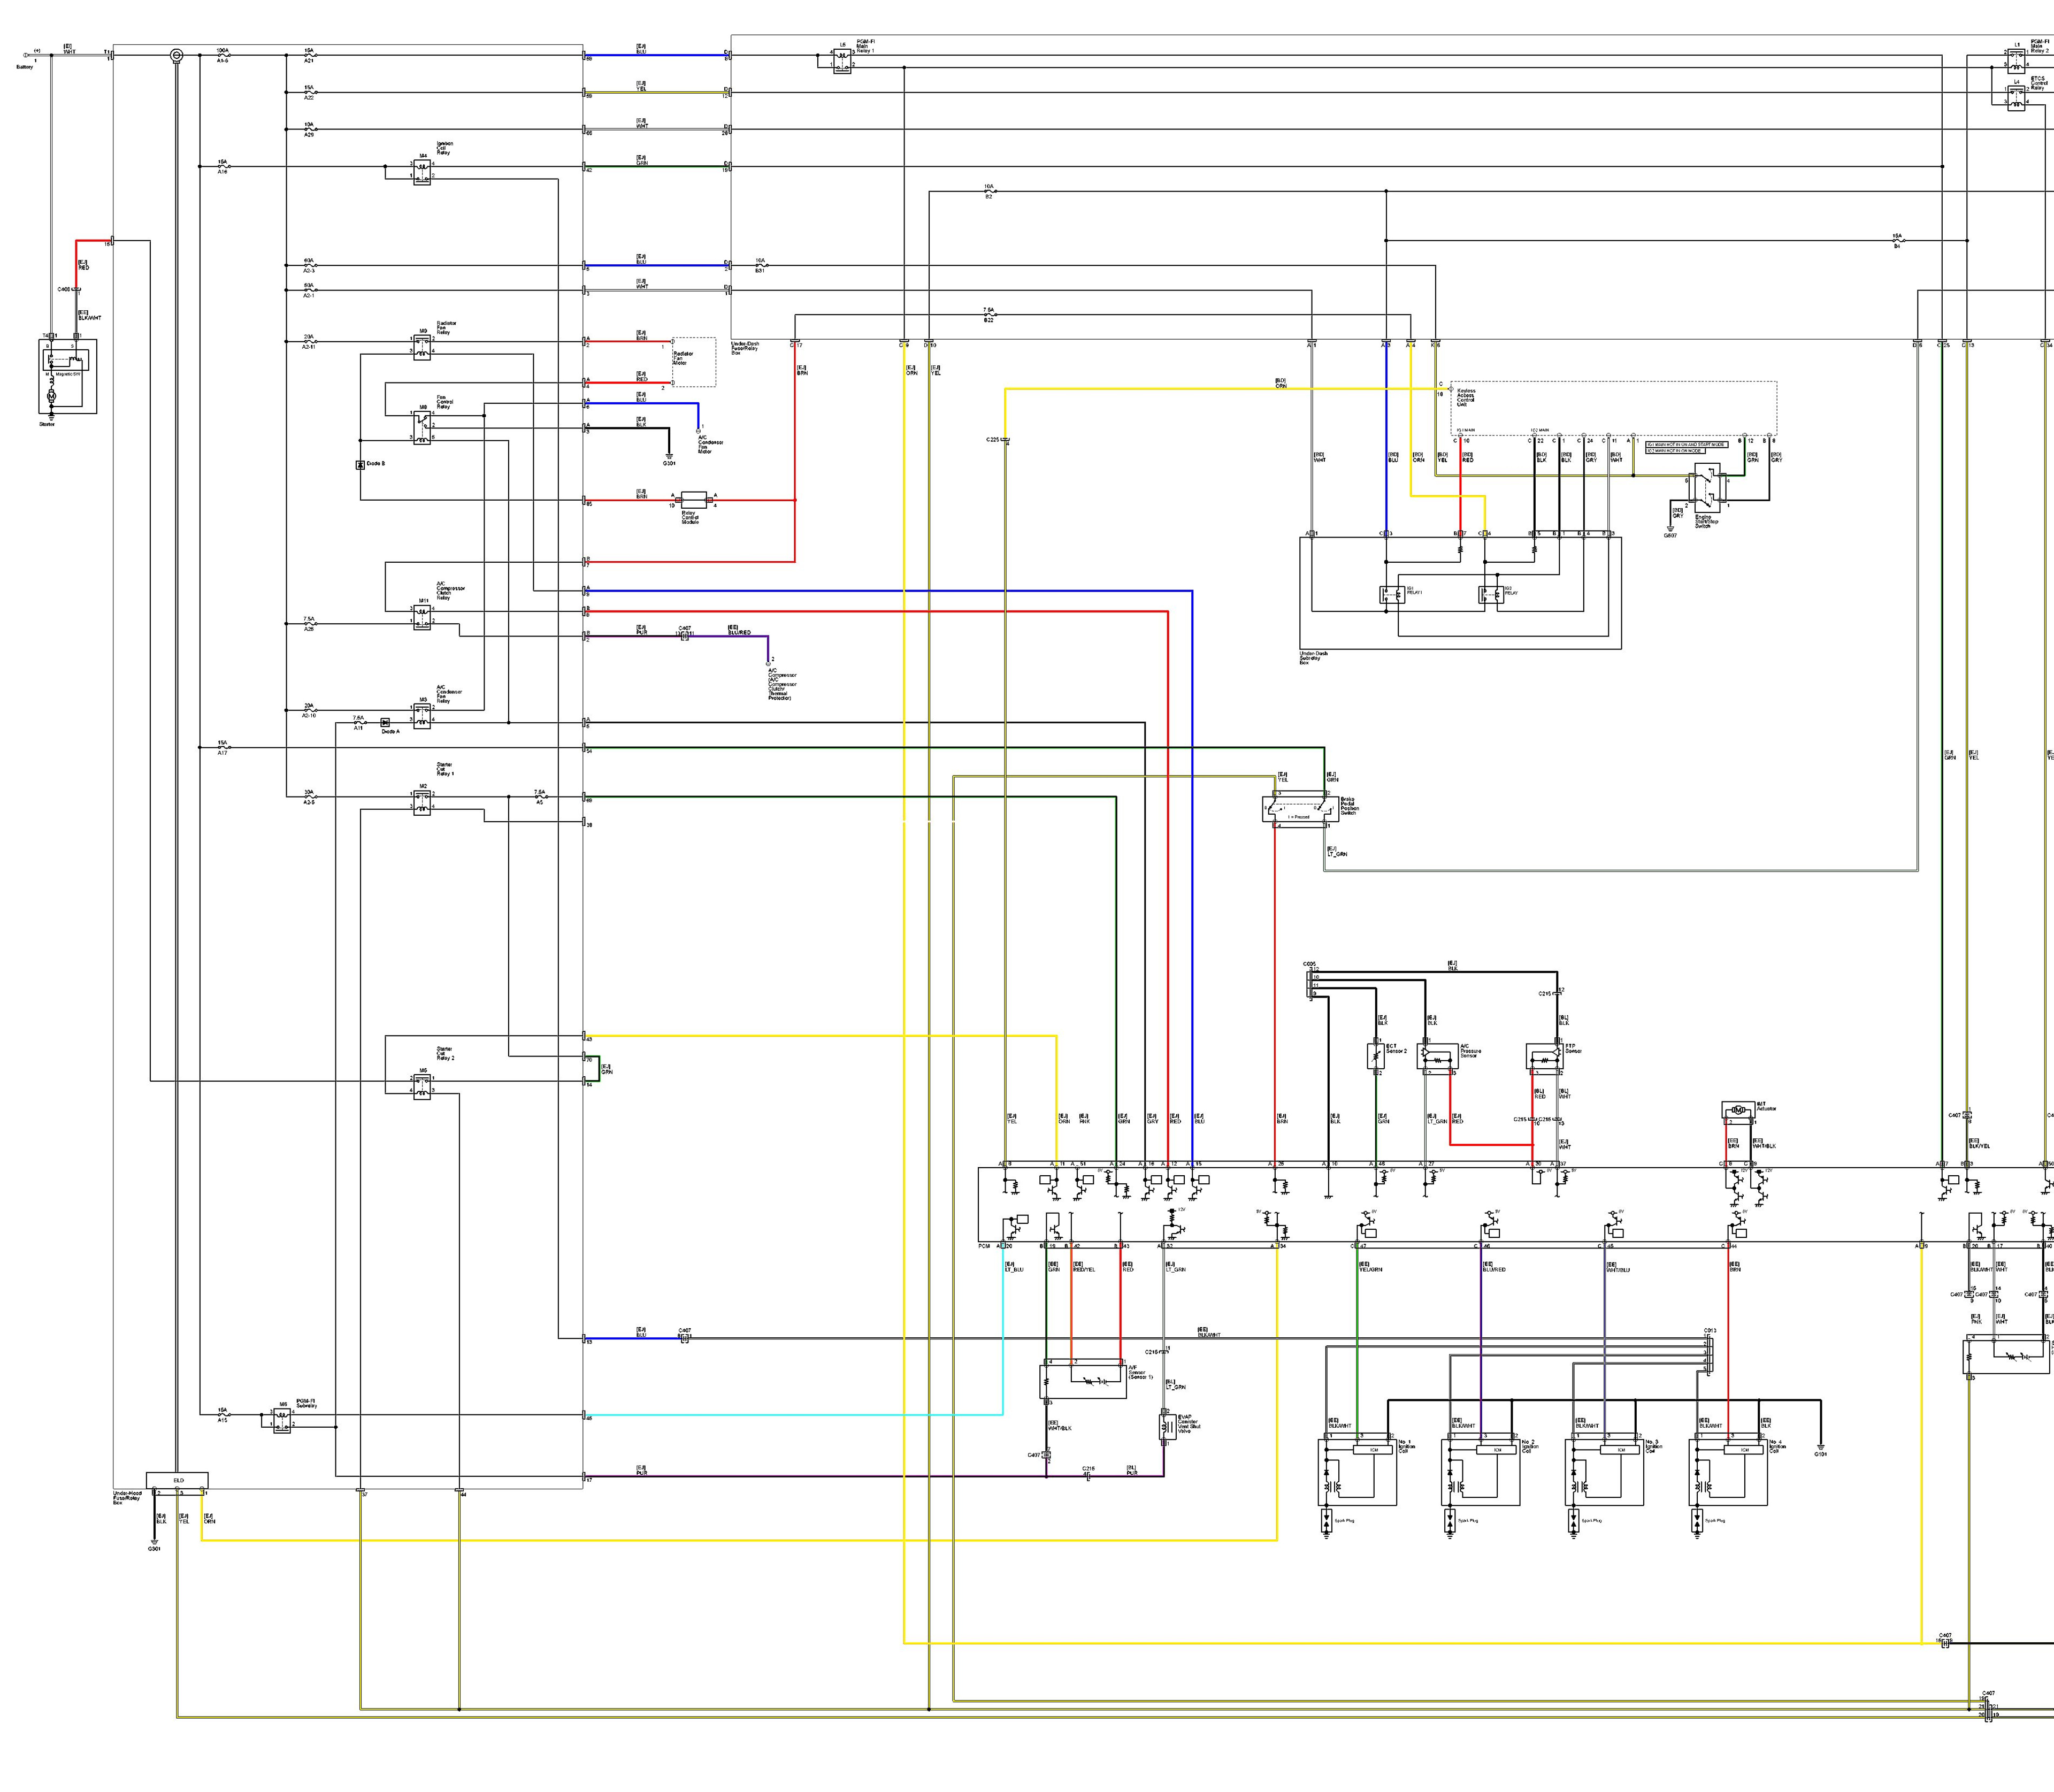 1990 Ford Escort wiring diagrams sample